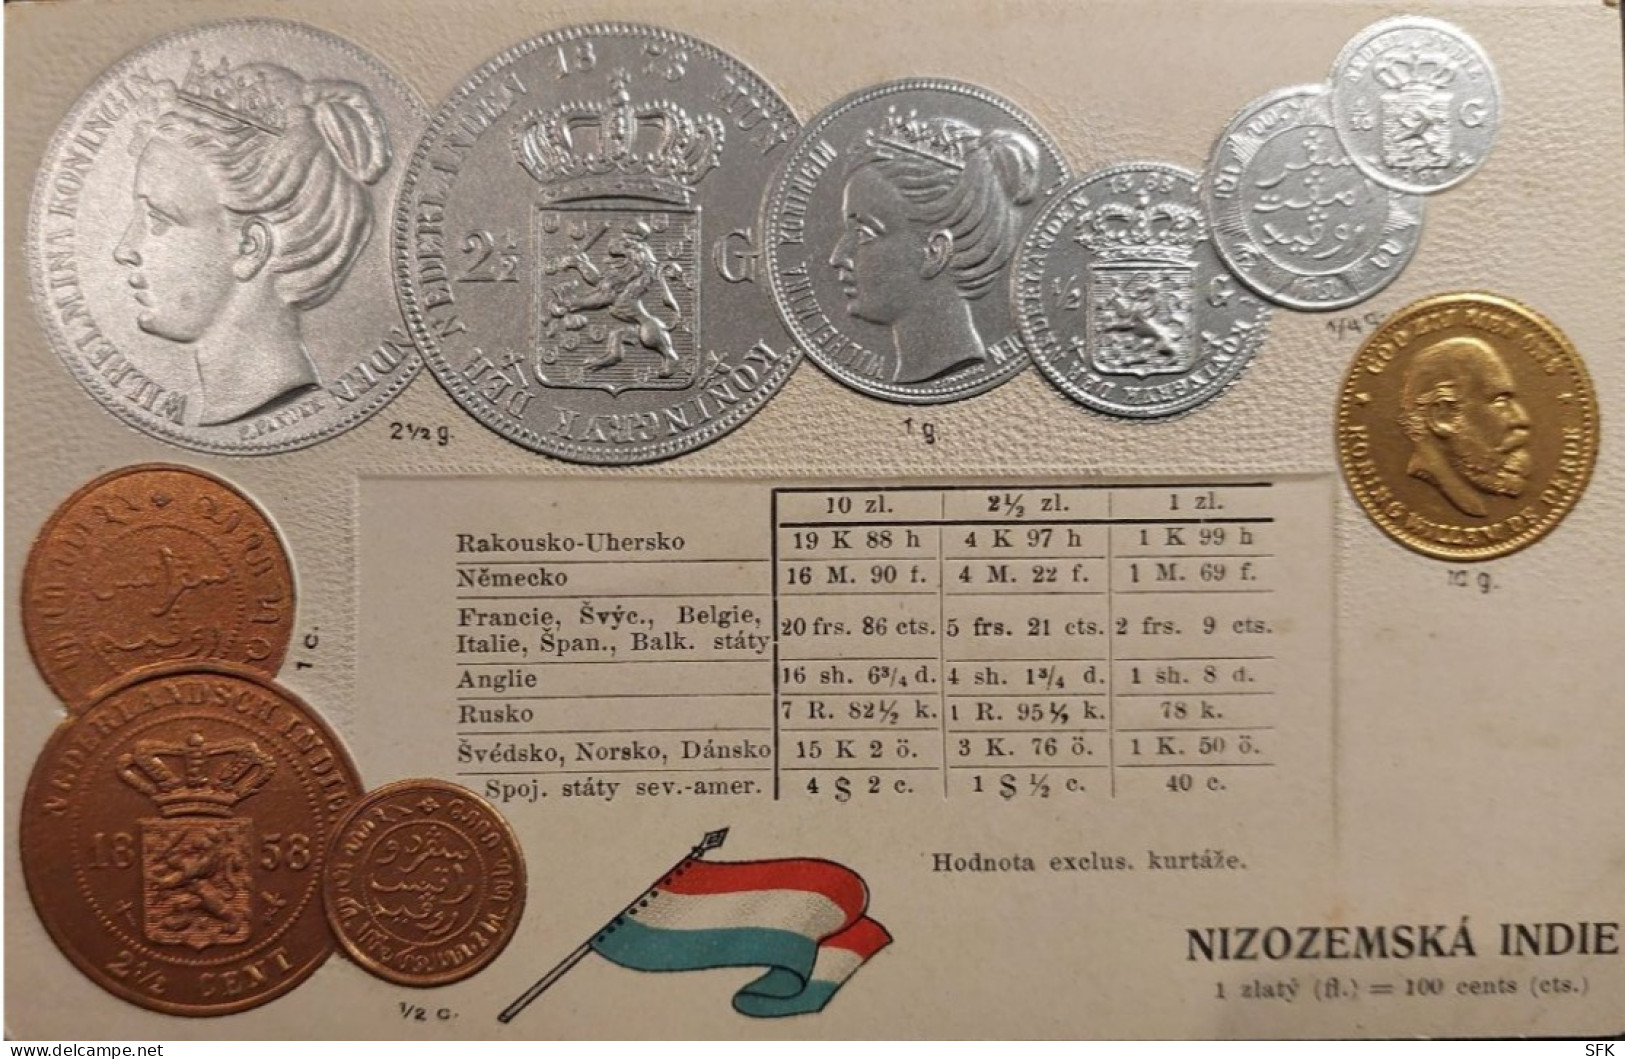 Netherland INDIA, Coins I/II- VF,  776 - Monnaies (représentations)